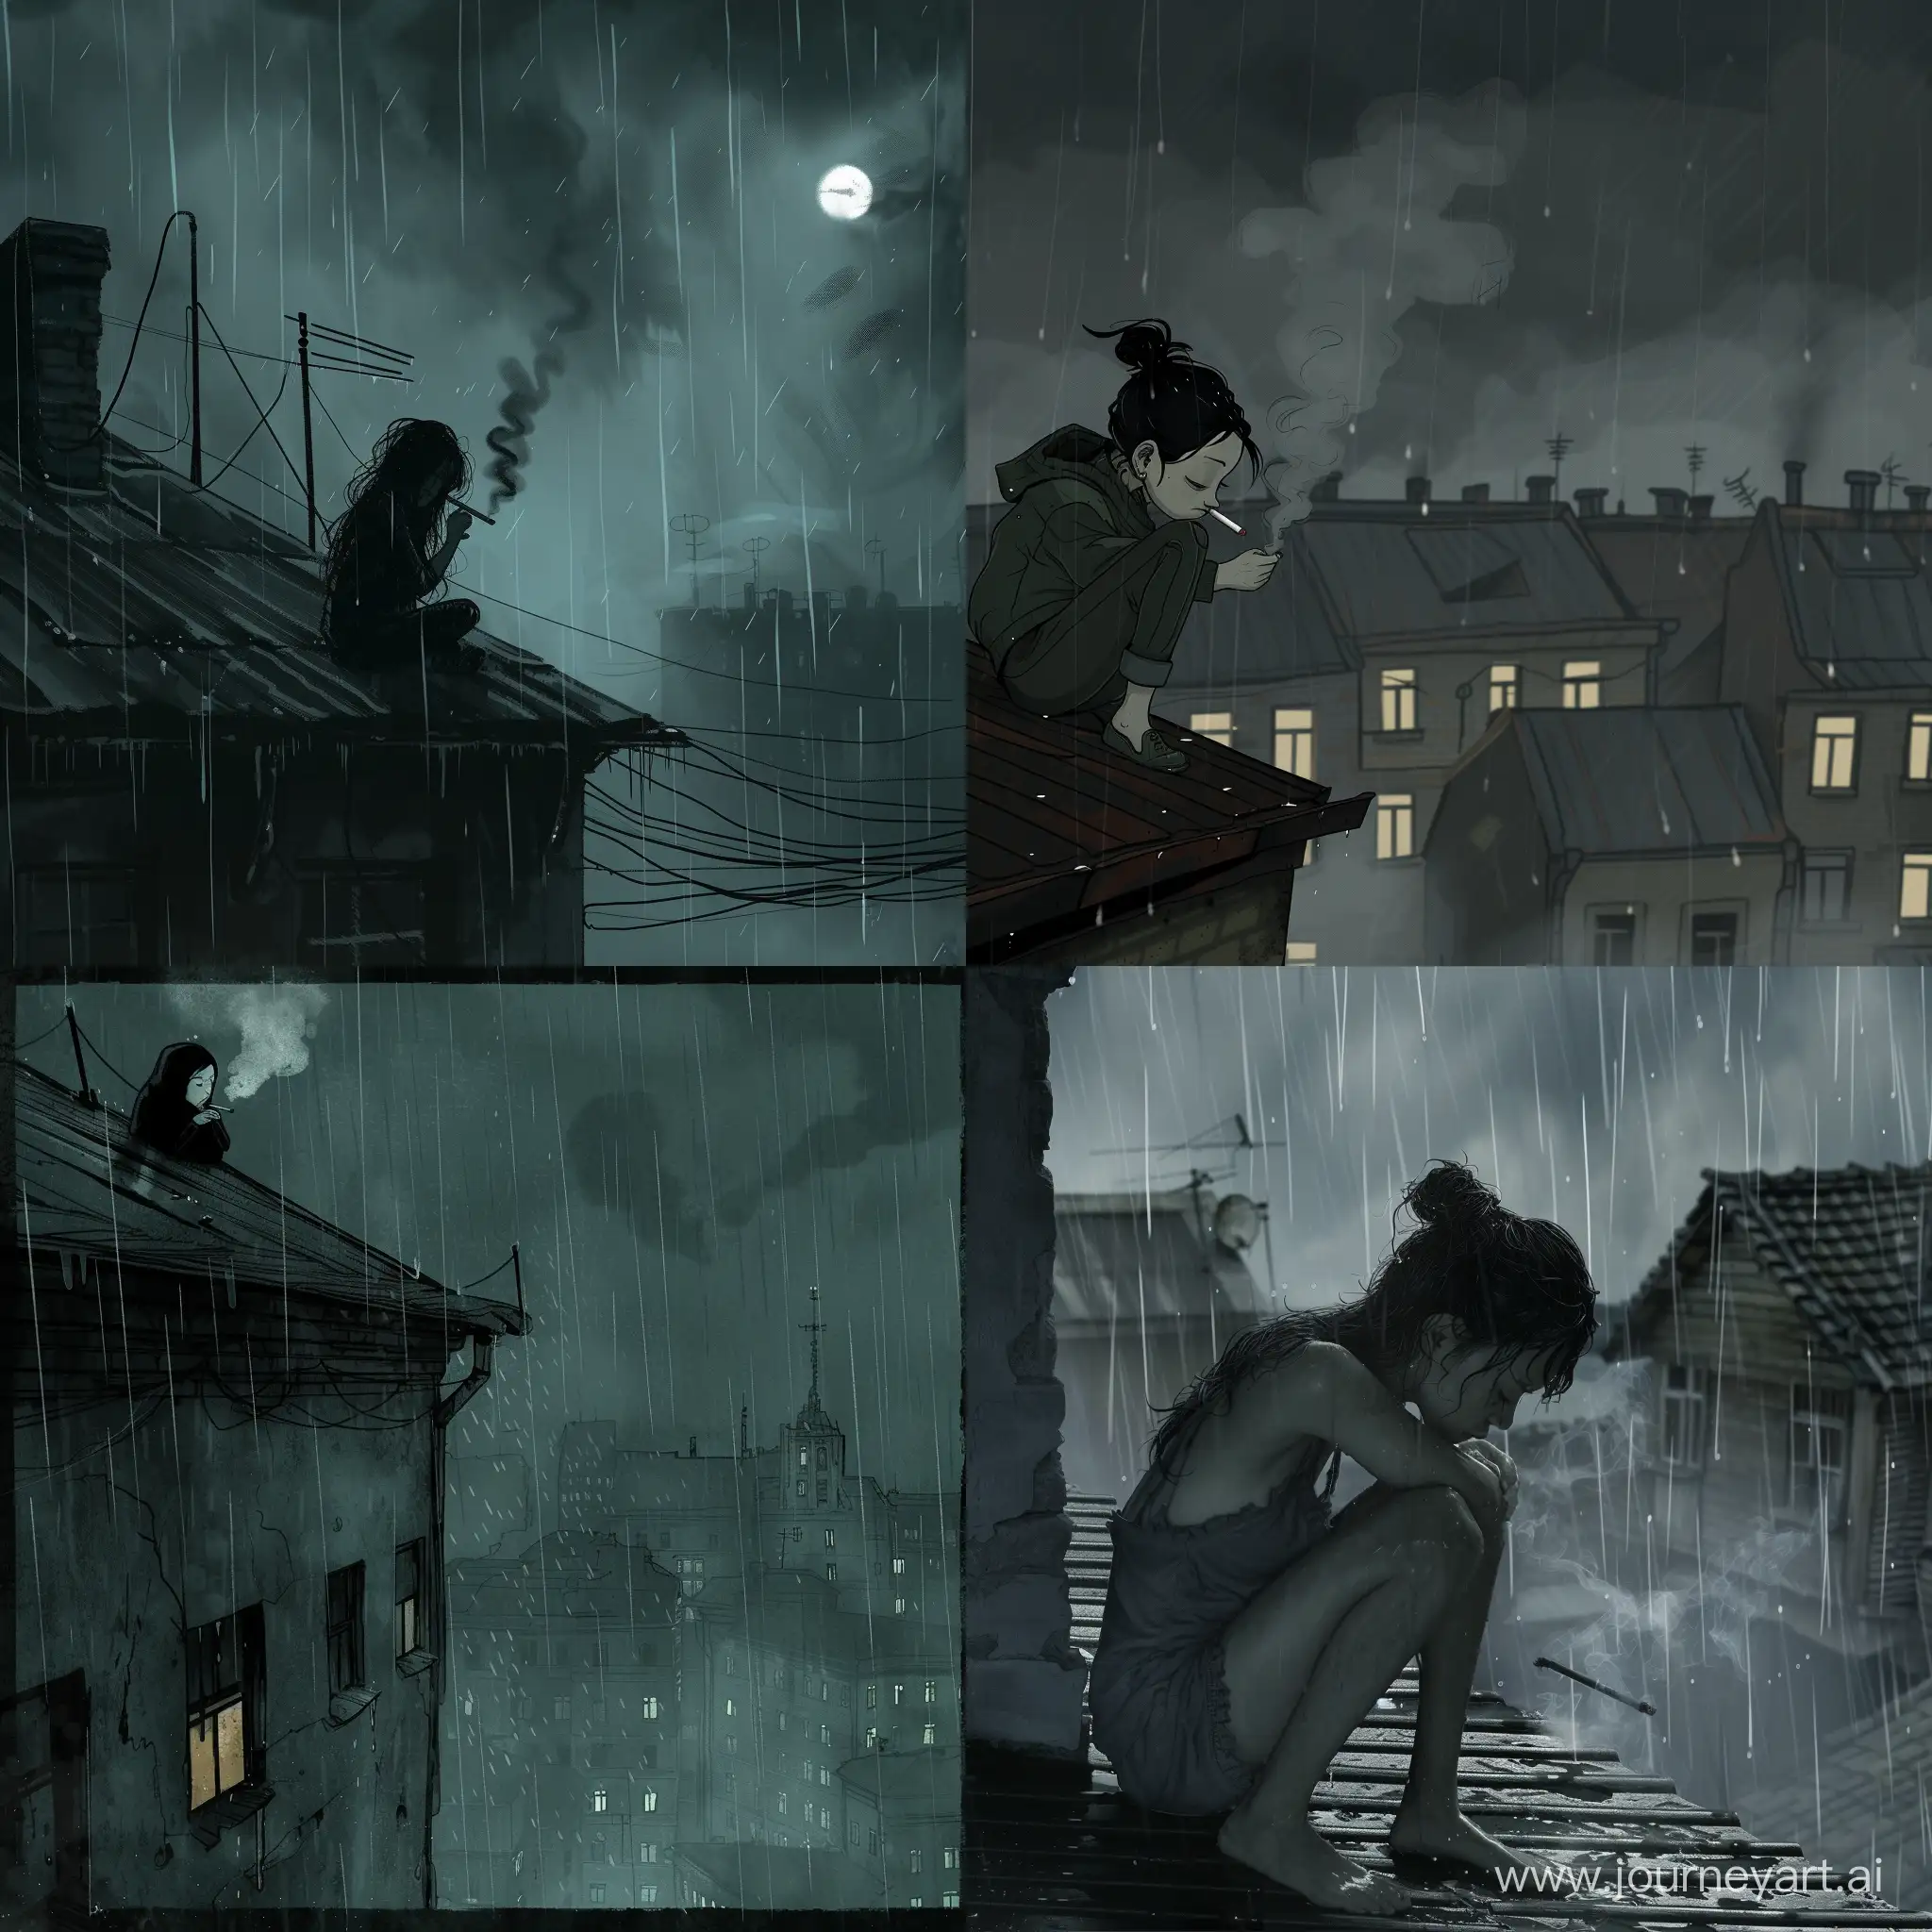 Depressive-Soviet-Panels-Sad-Girl-Smoking-on-Rainy-Roof